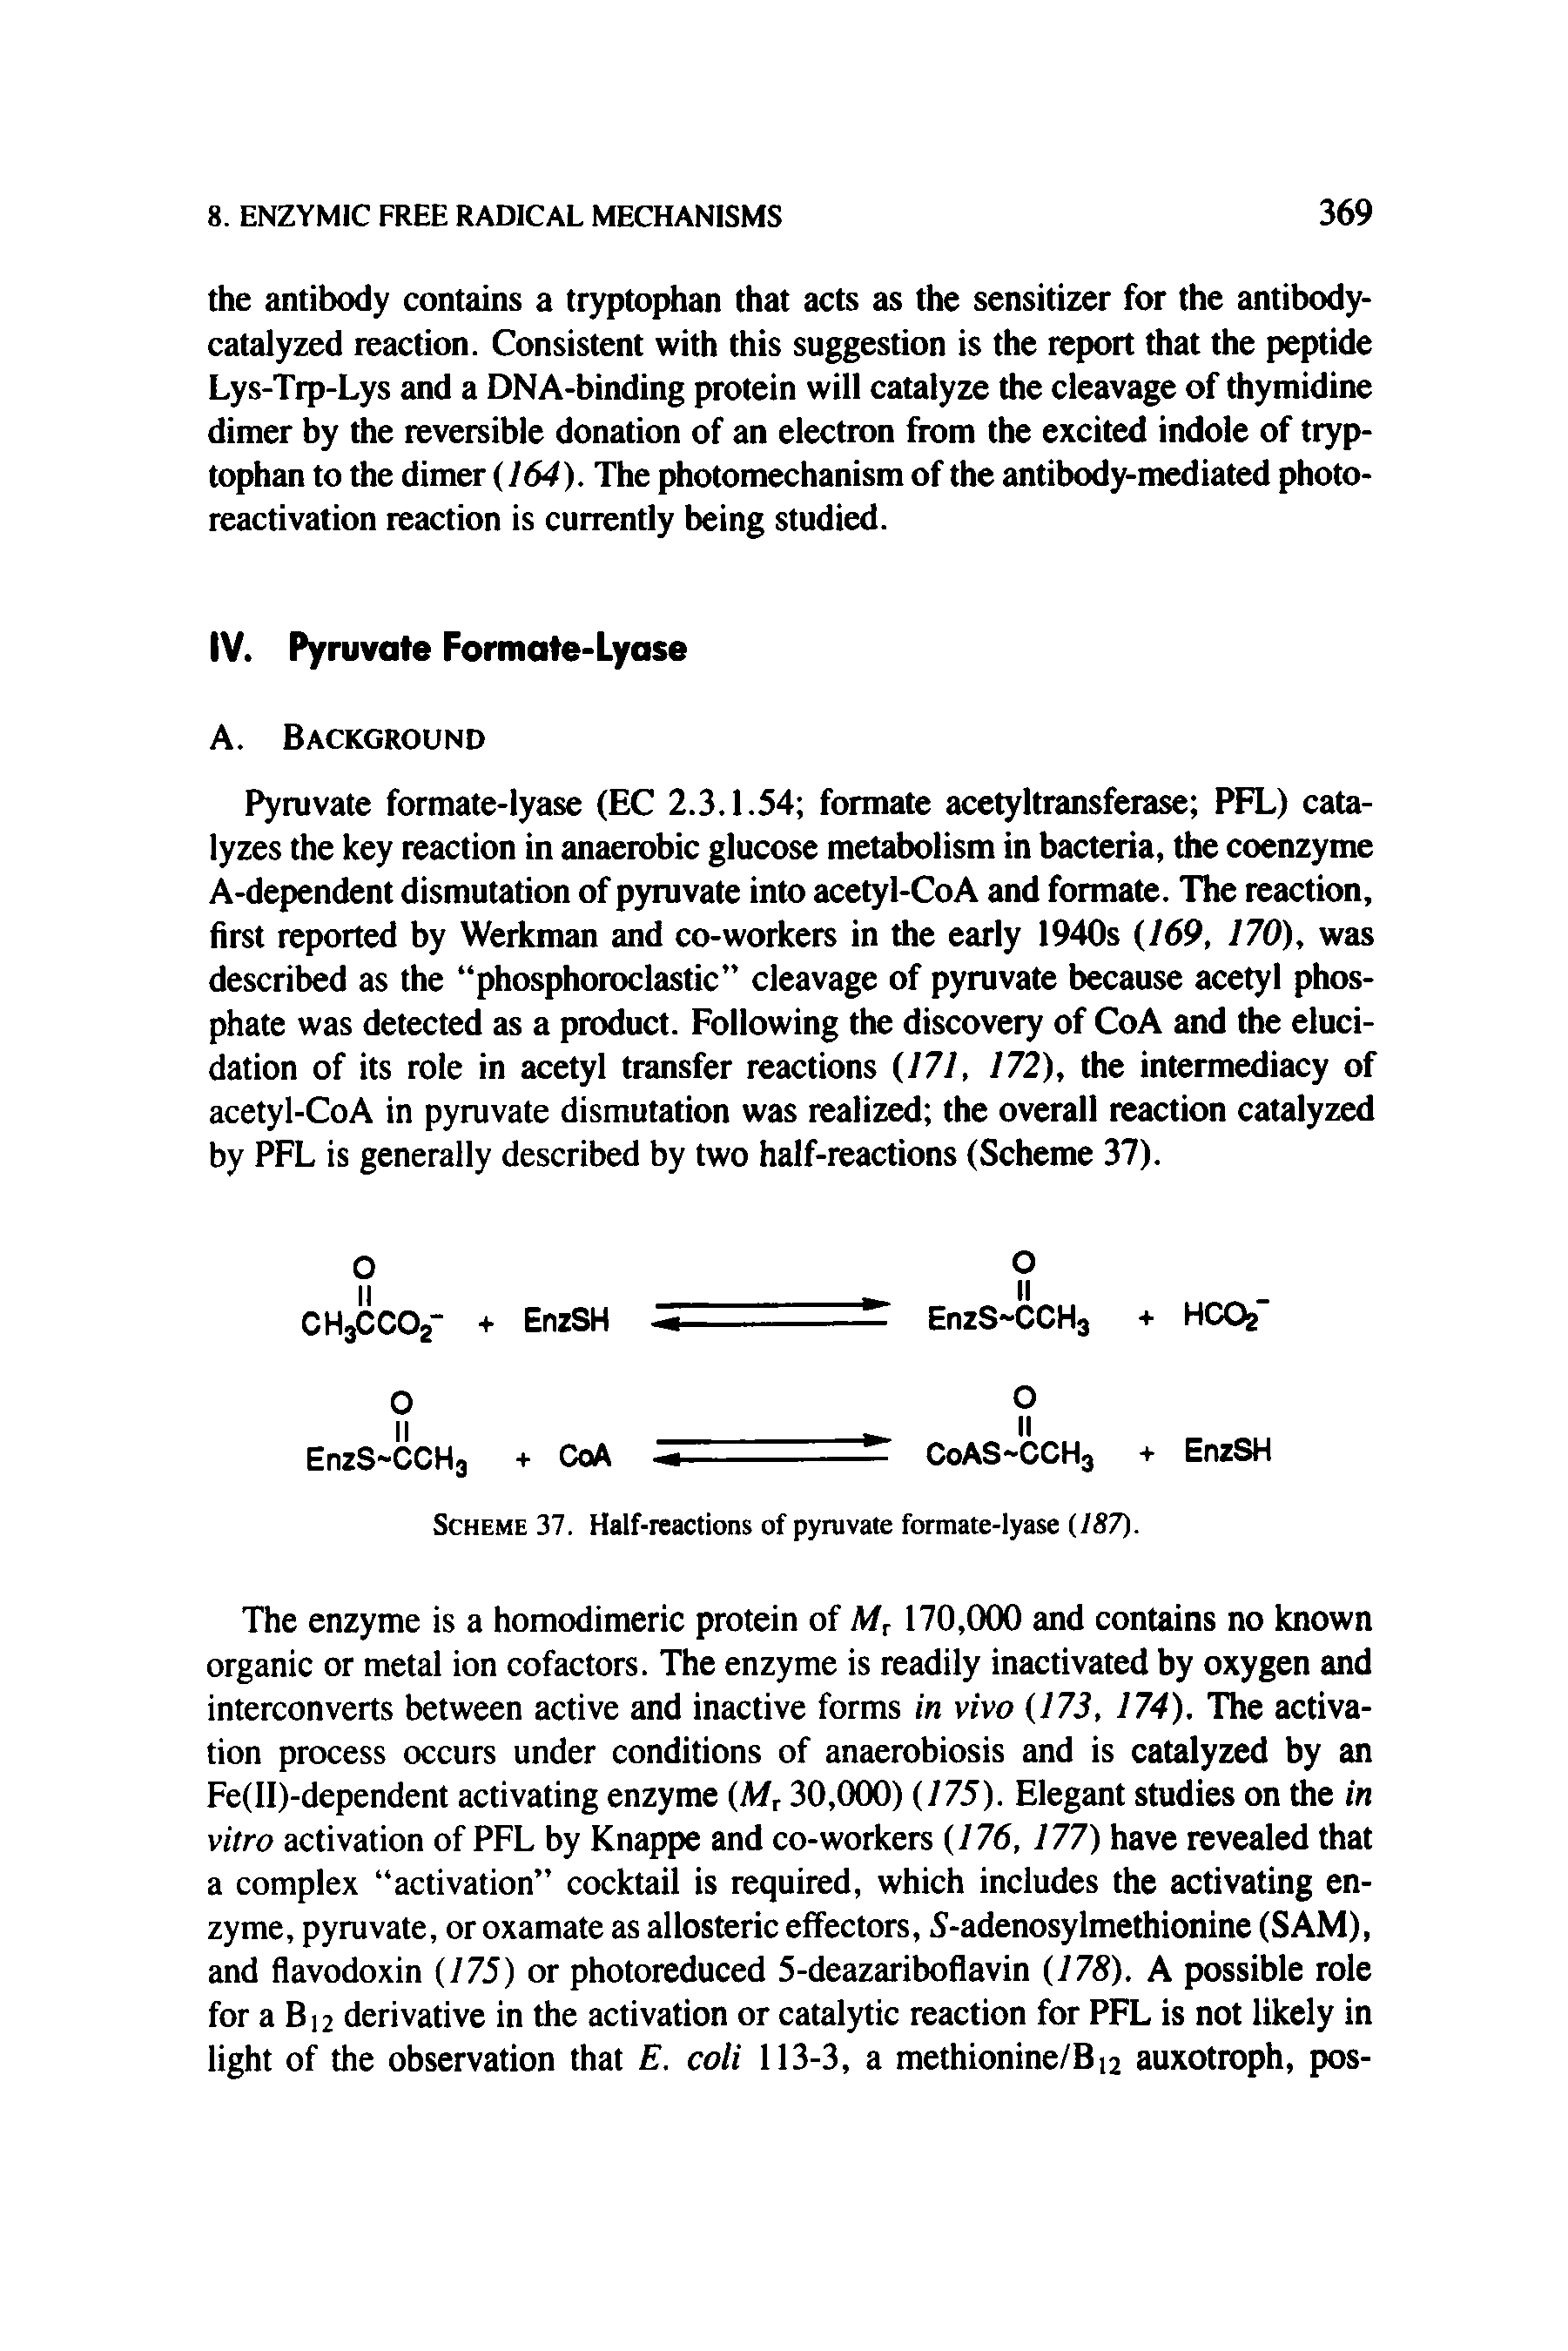 Scheme 37. Half-reactions of pyruvate formate-lyase 187).